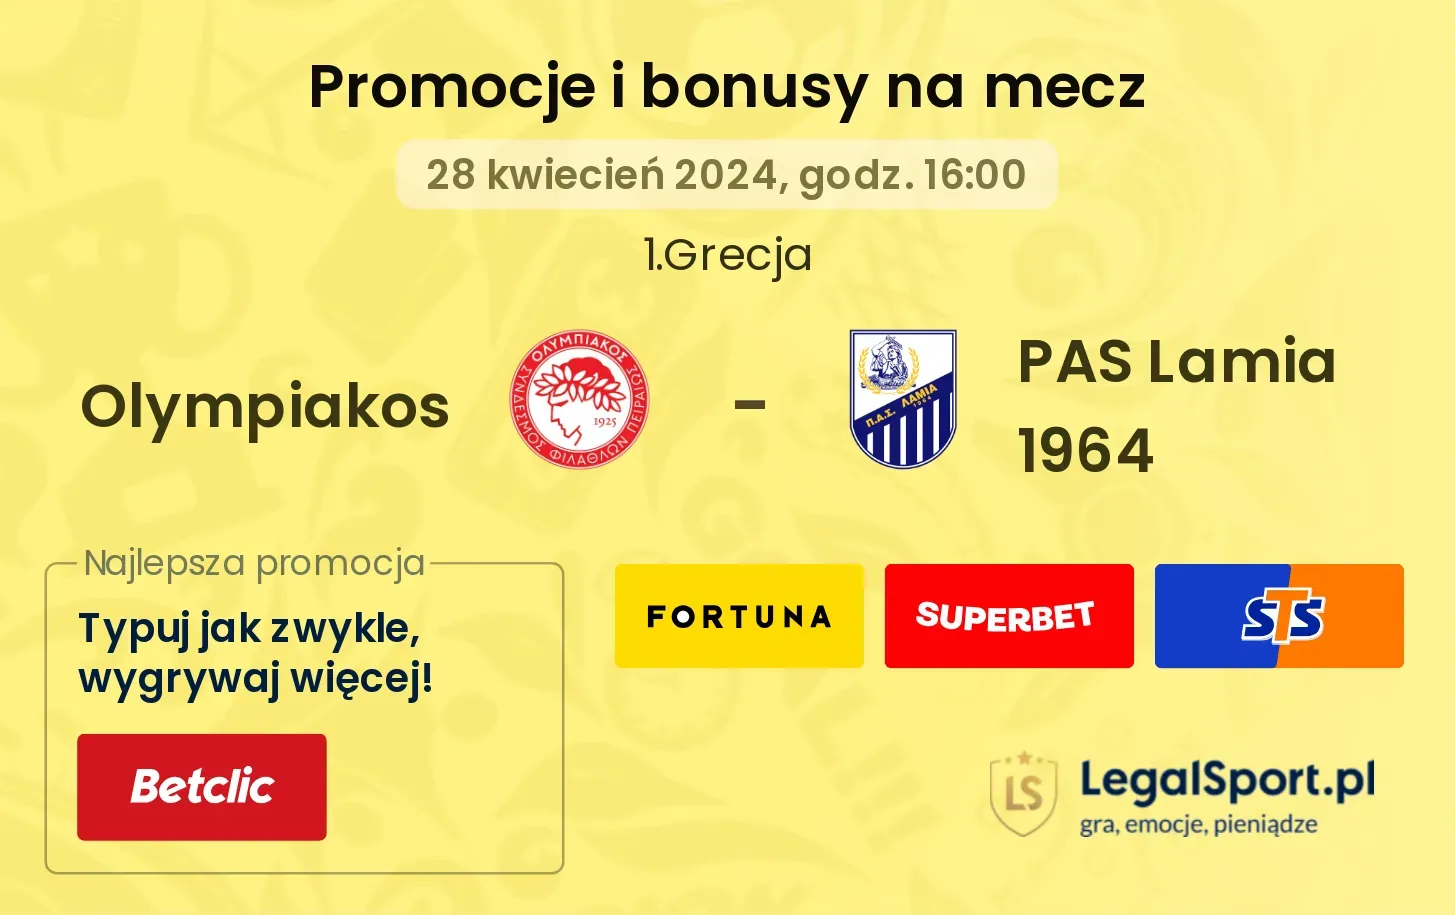 Olympiakos - PAS Lamia 1964 promocje bonusy na mecz